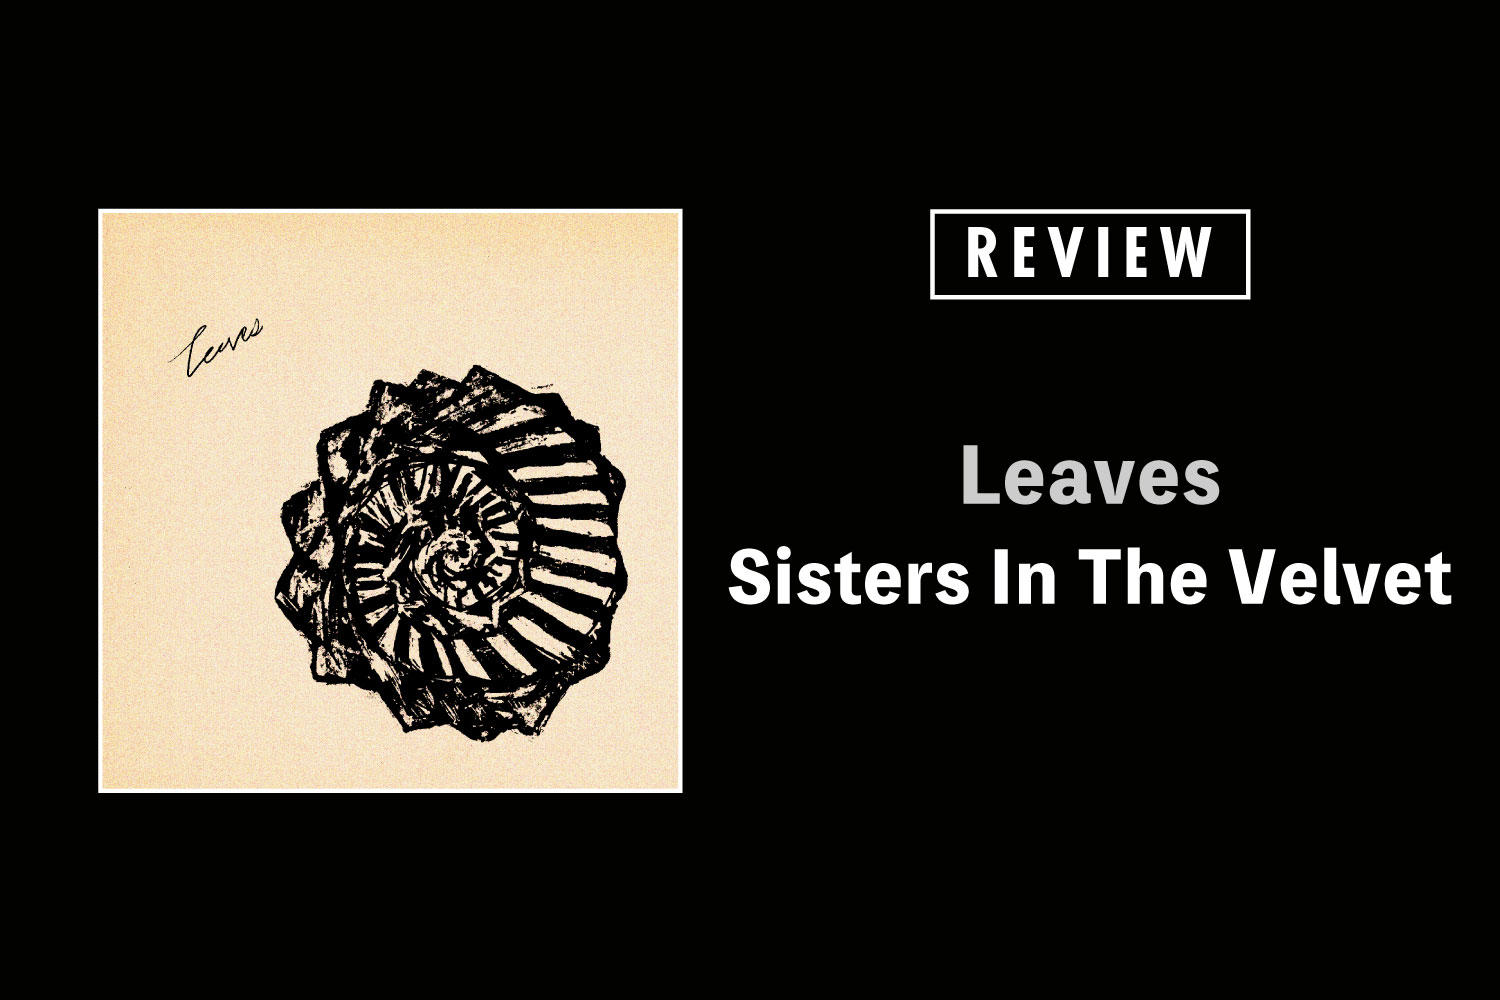 Sisters In The Velvet「Leaves」──オルタナティブ、エクスペリメンタル、そしてポップ。さまざまな概念が溶け合い美しく響く